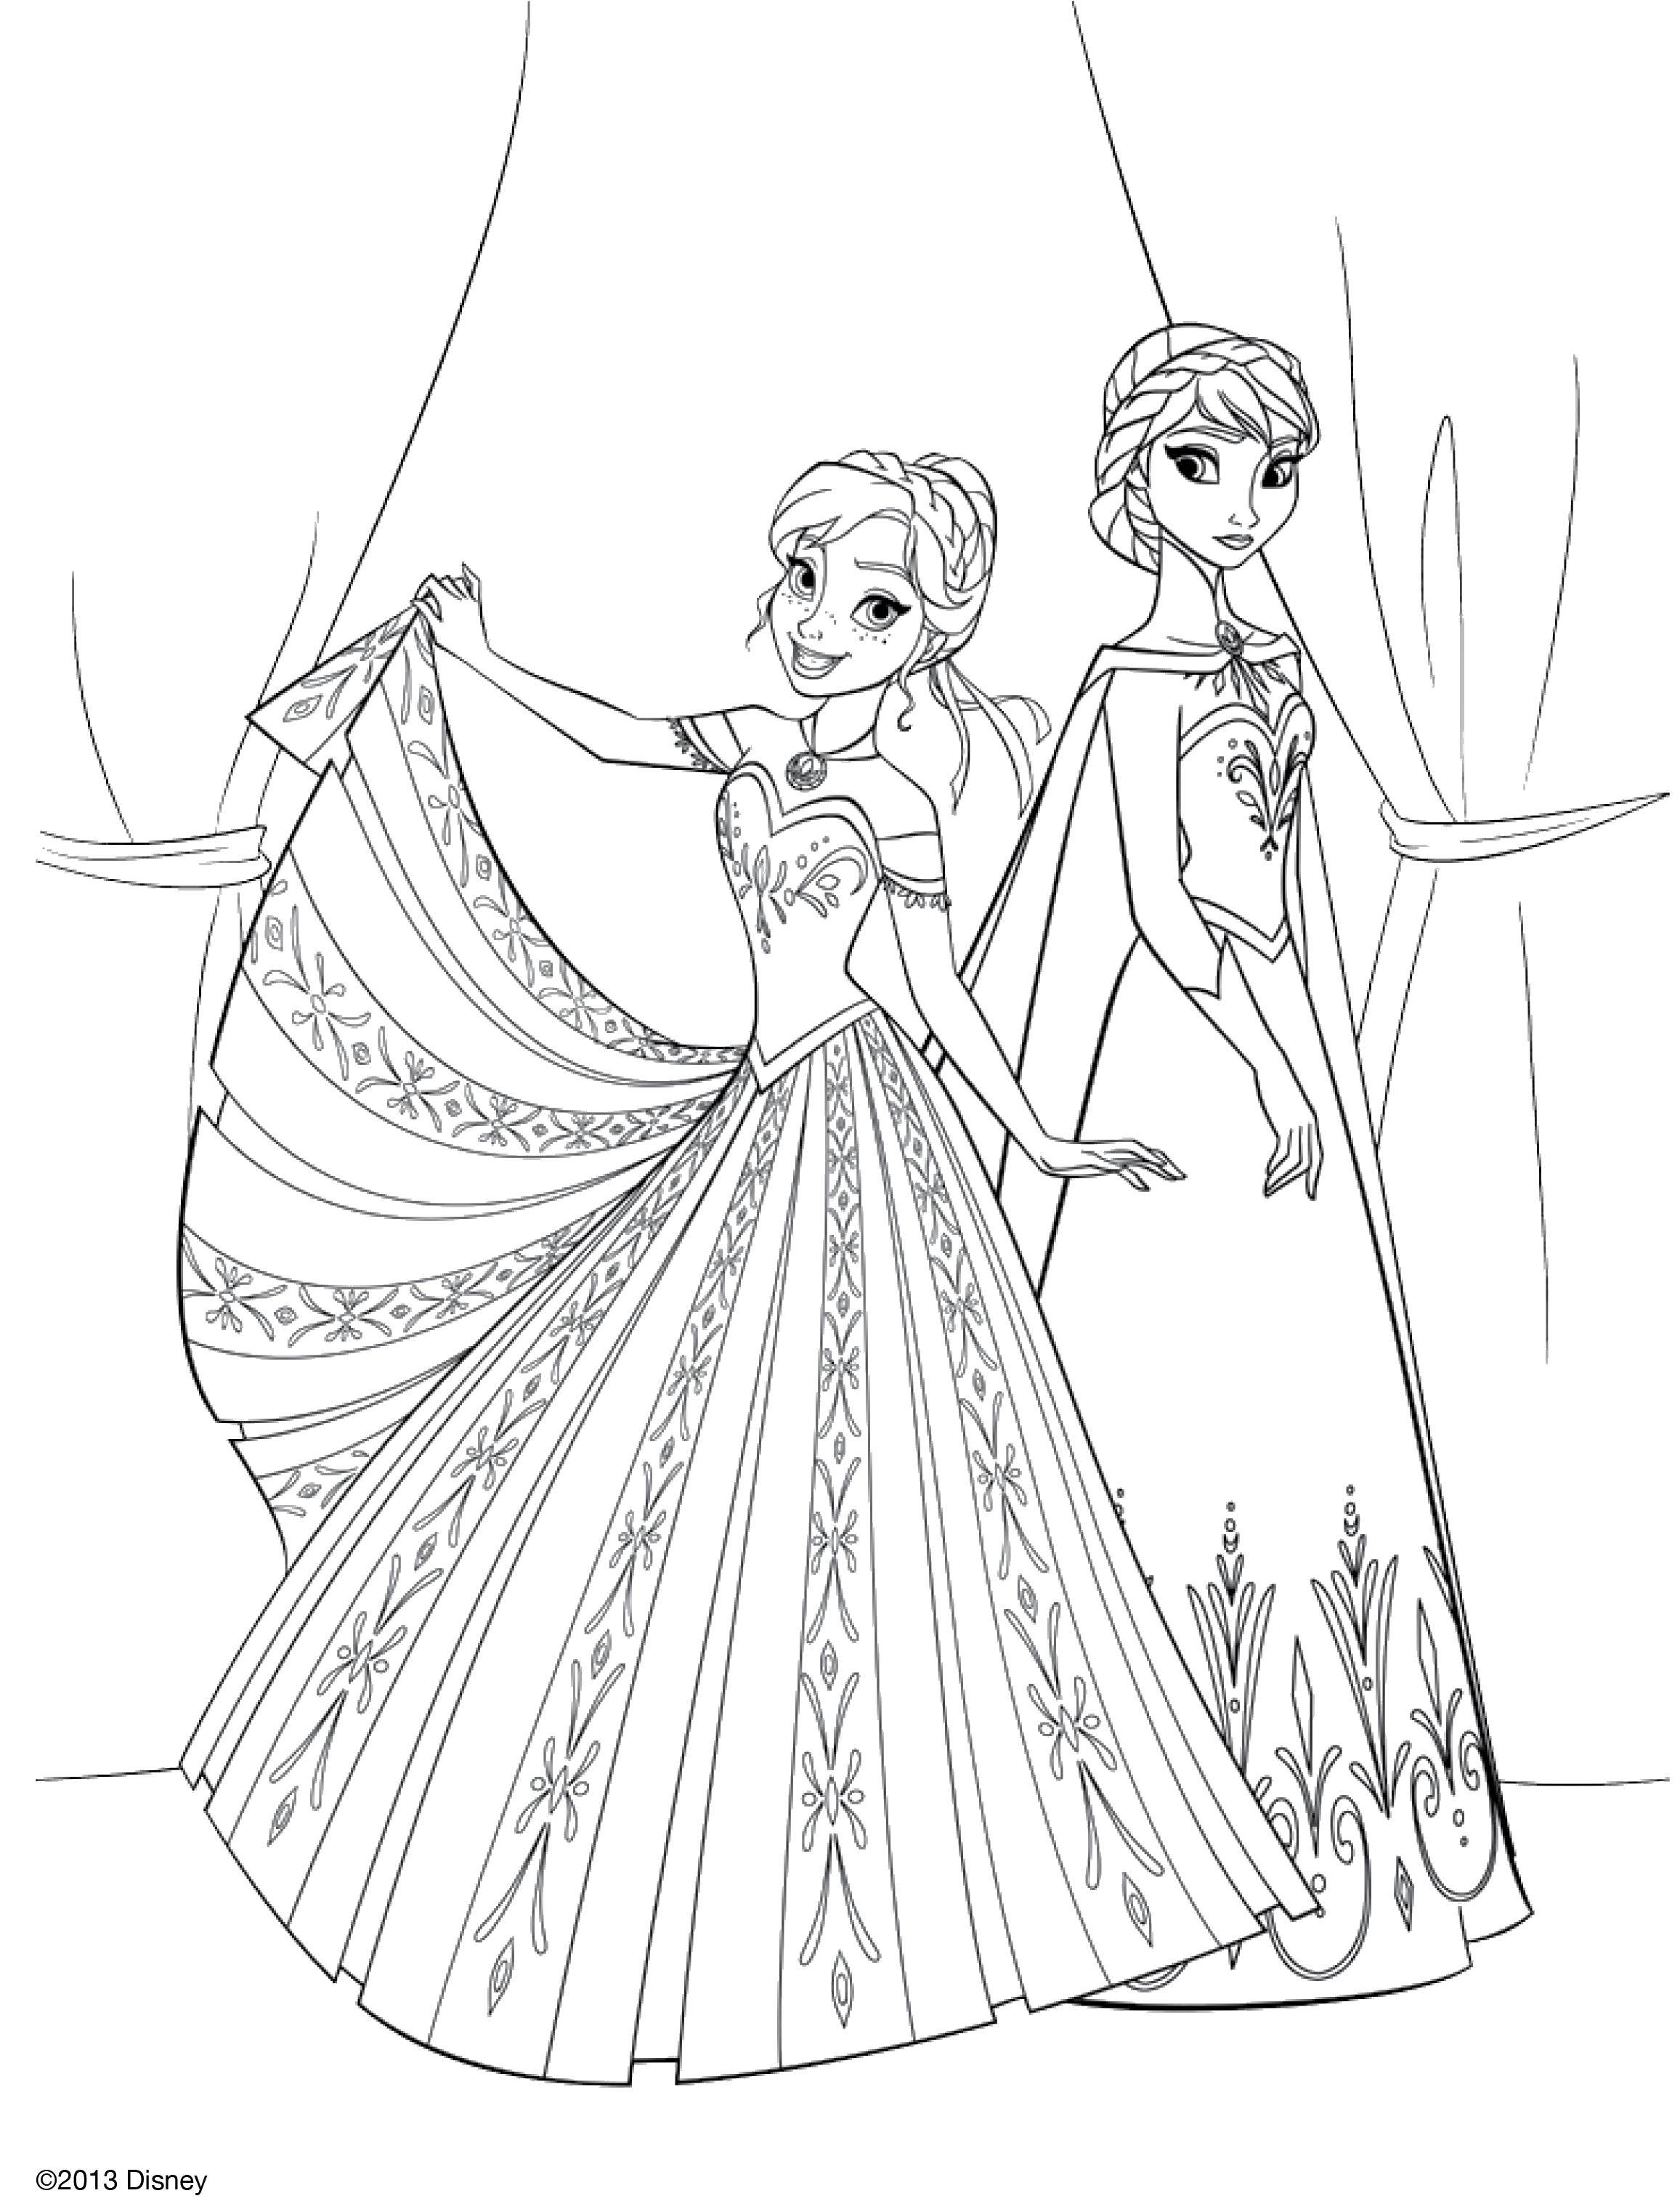 Coloring Fun Anna and Elsa. Category coloring cold heart. Tags:  Disney, Elsa, frozen, Princess.